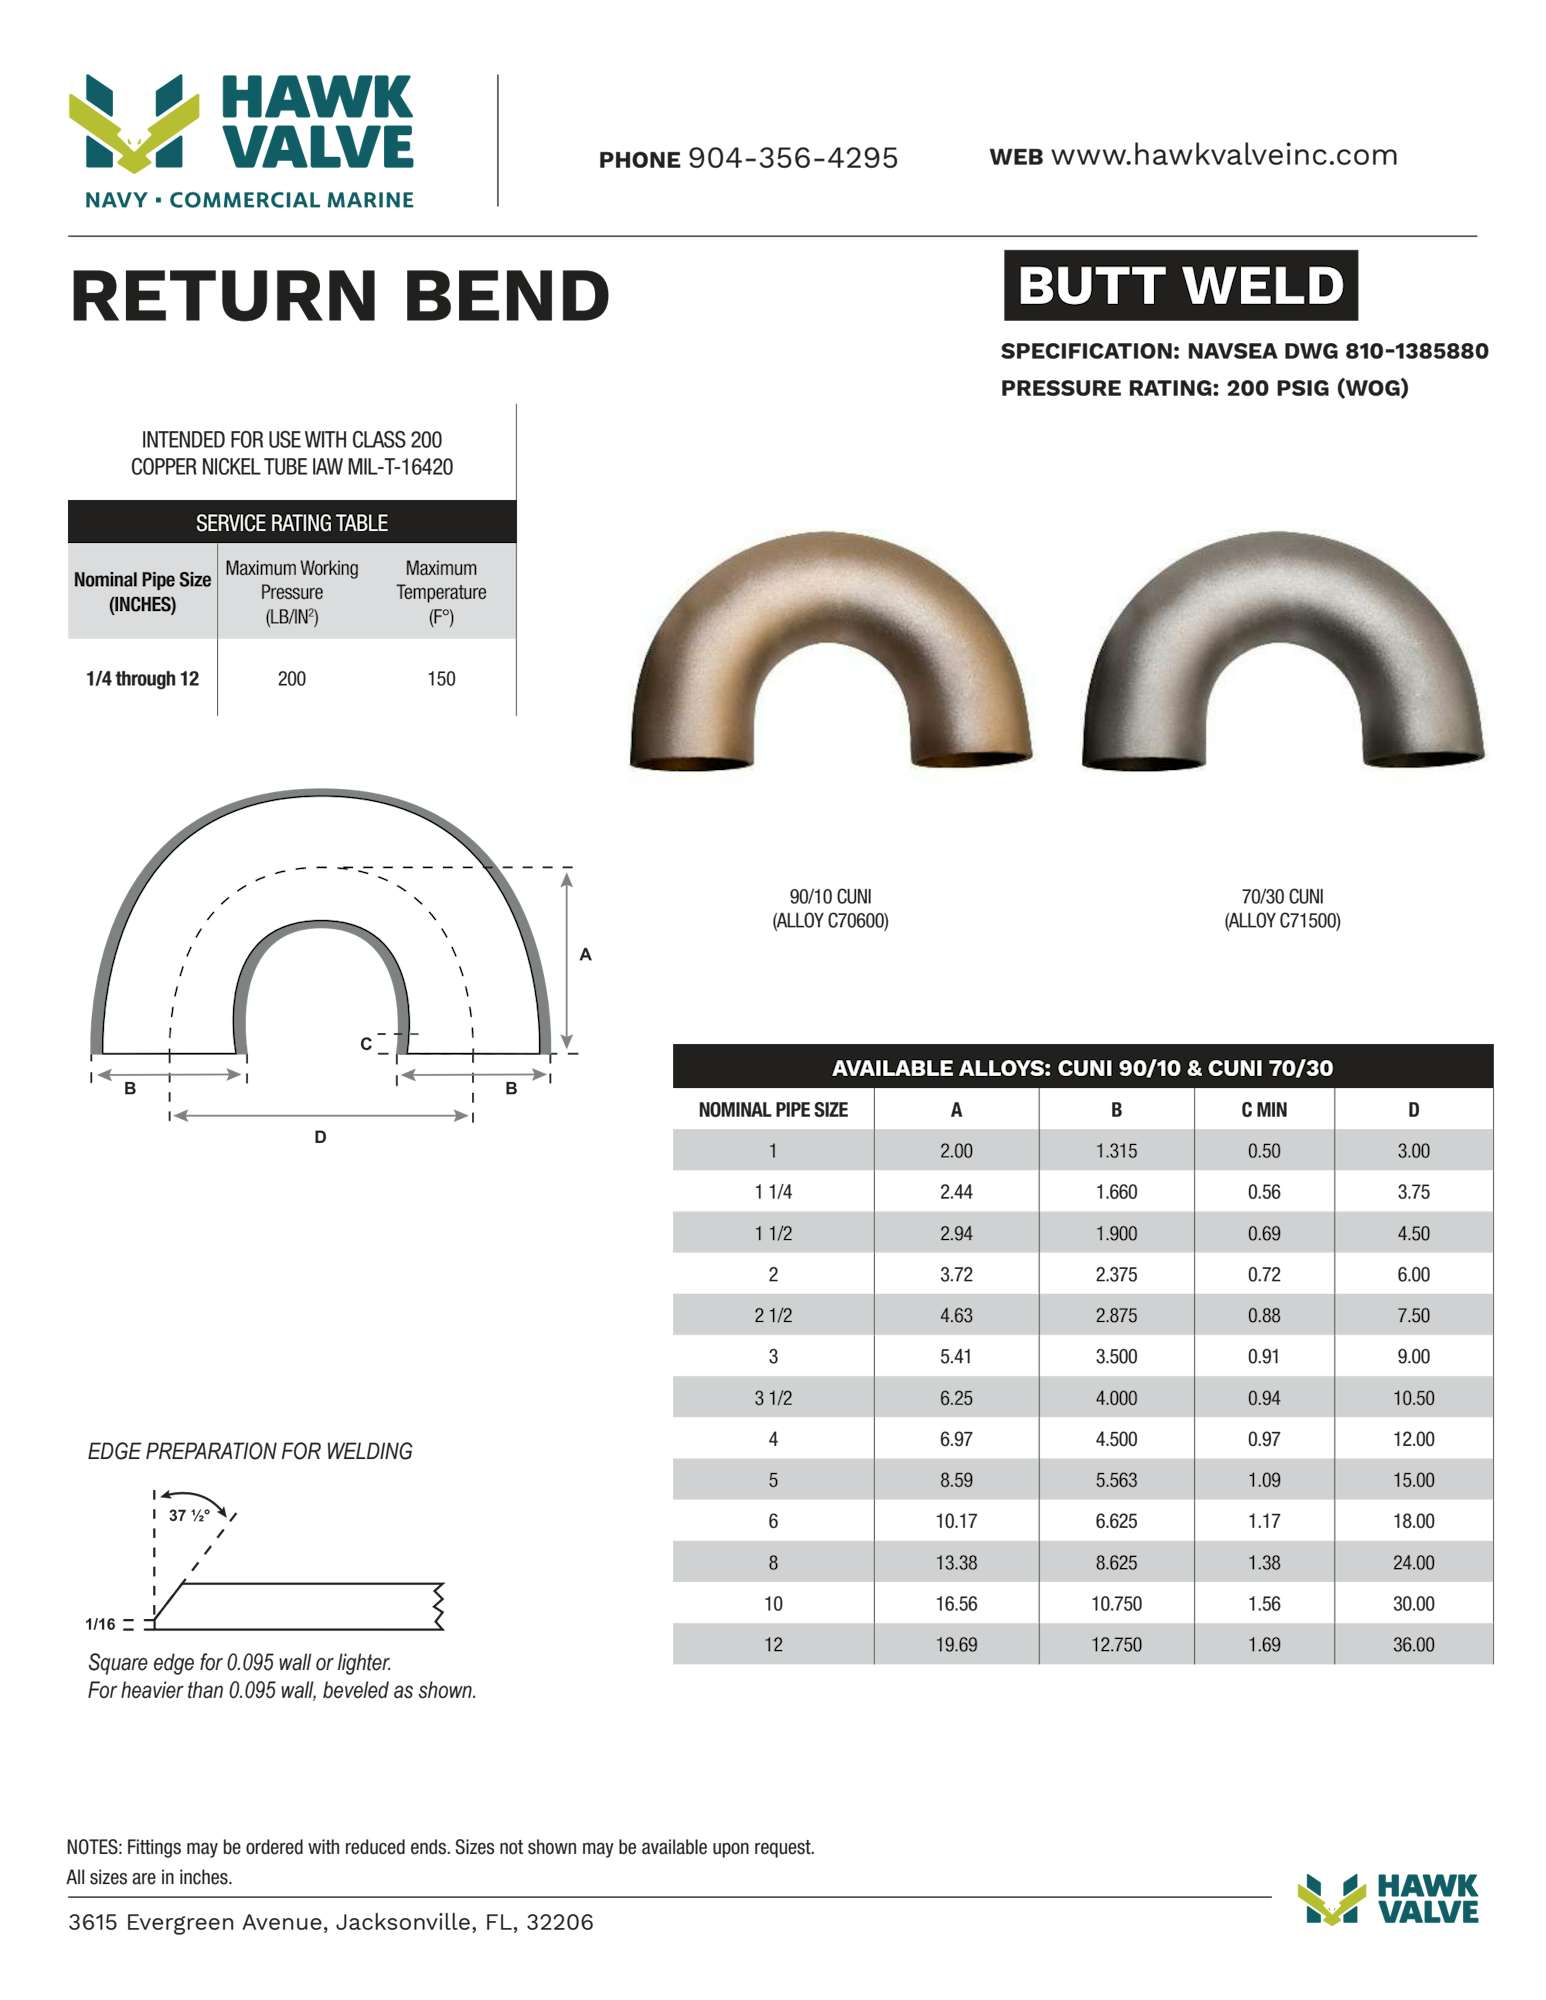 BUTT-WELD-RETURN-BEND.pdf